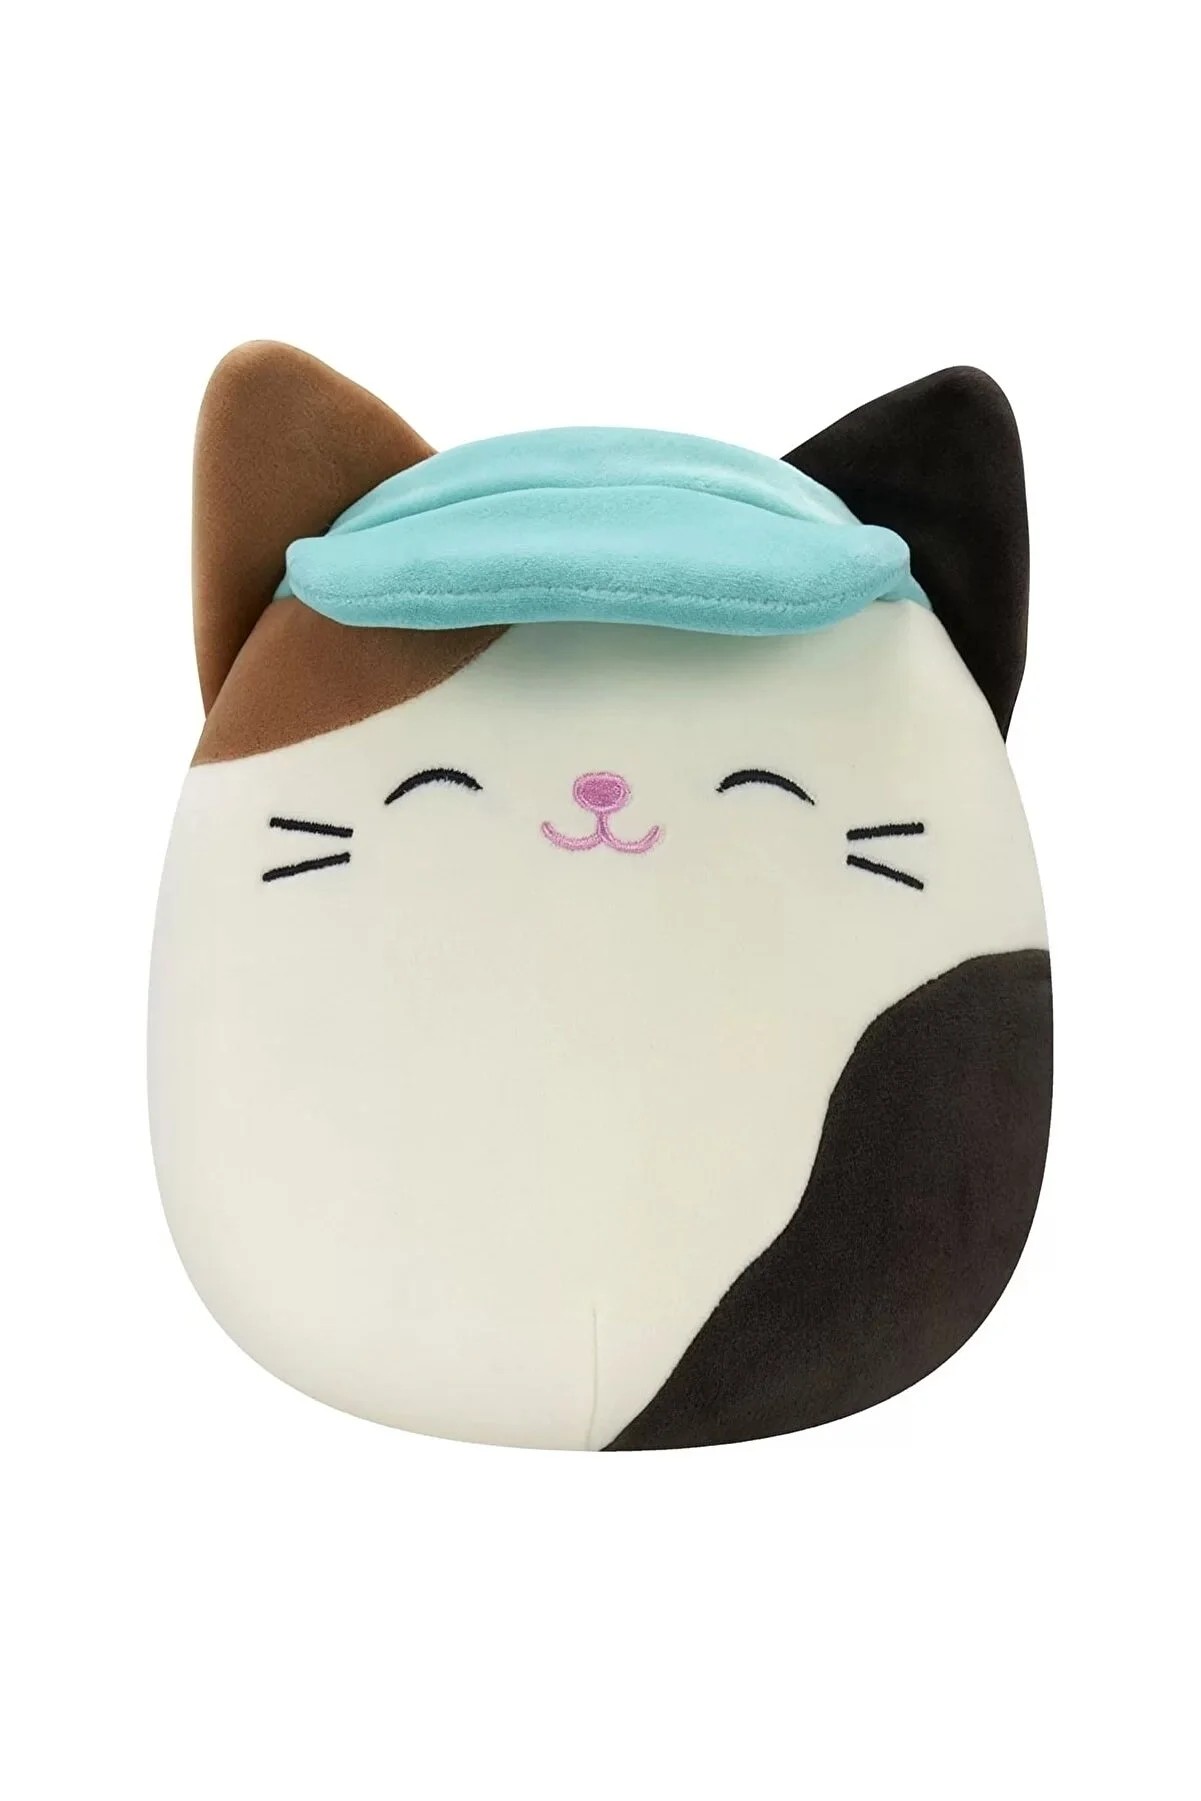 Squishmallow Şapkalı Kedi Cam 20 cm